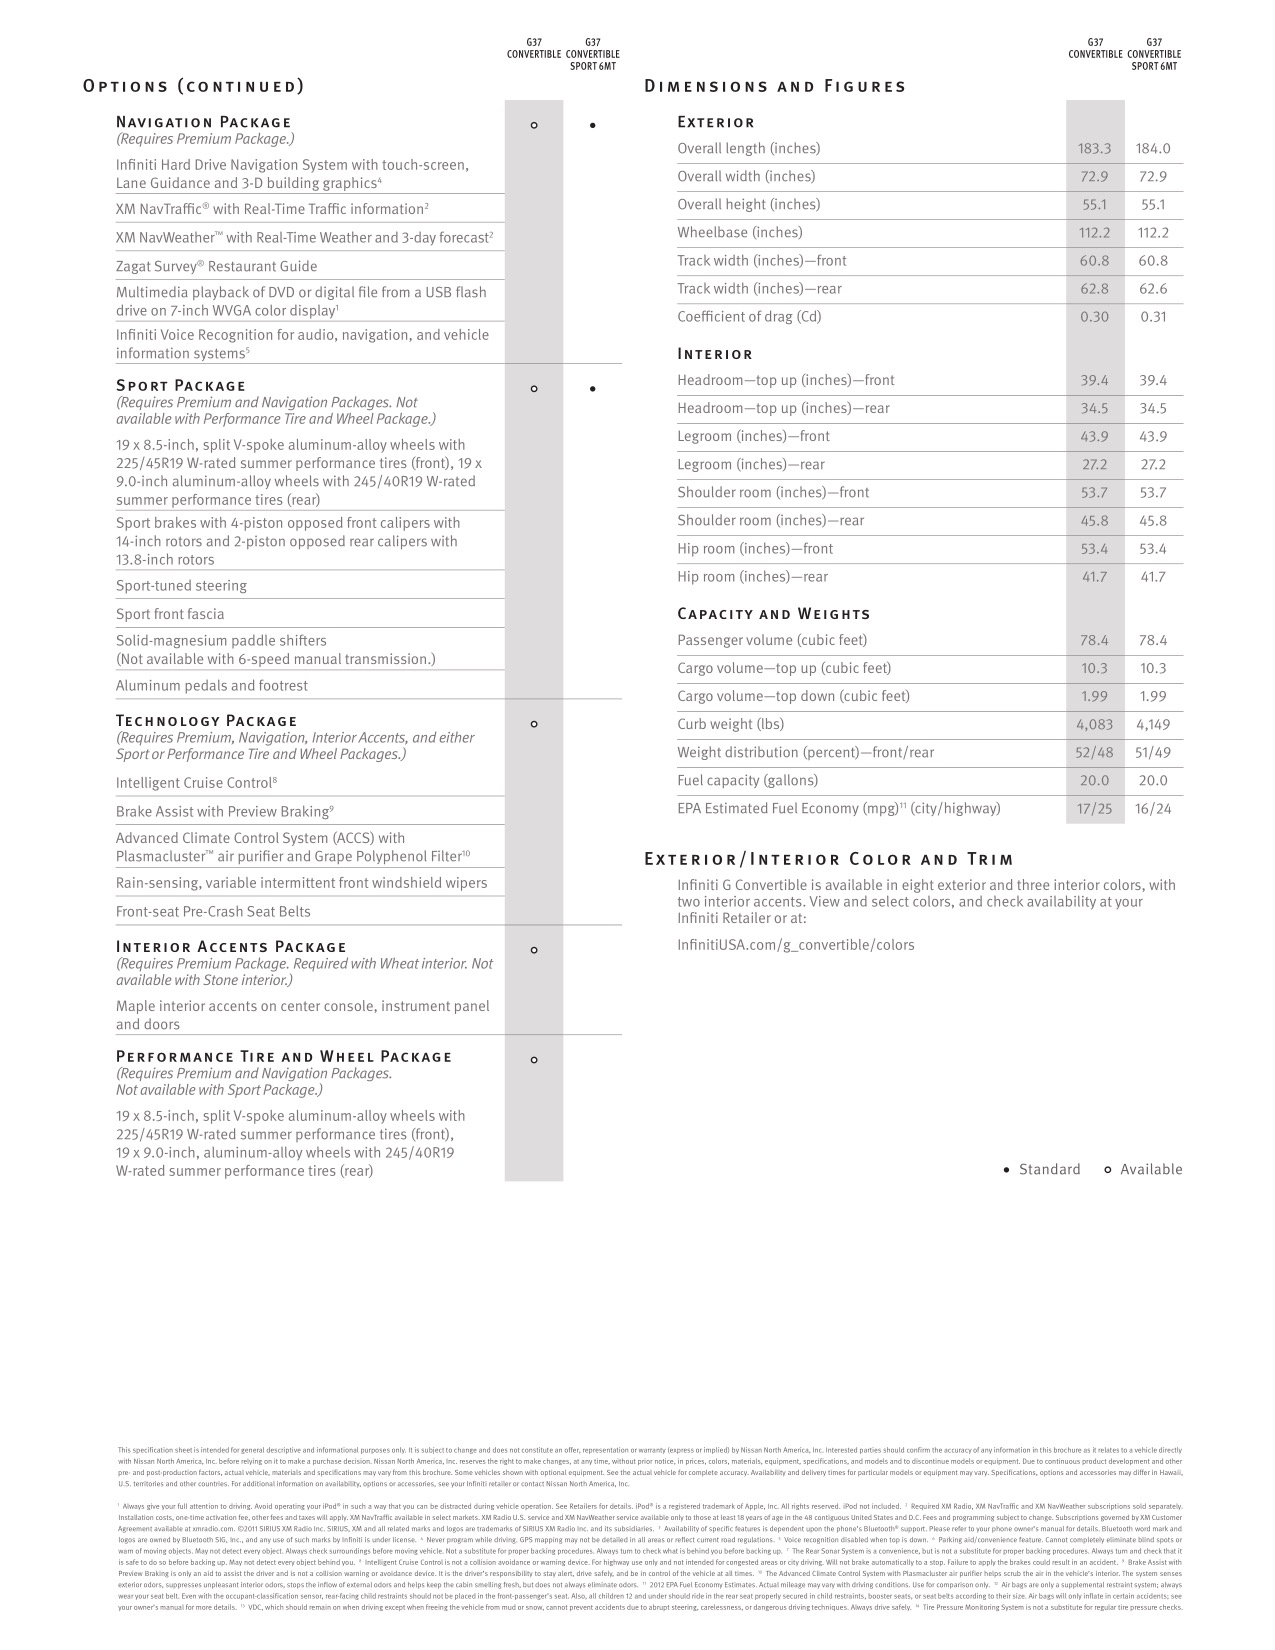 2012 Infiniti G Convertible Brochure Page 1